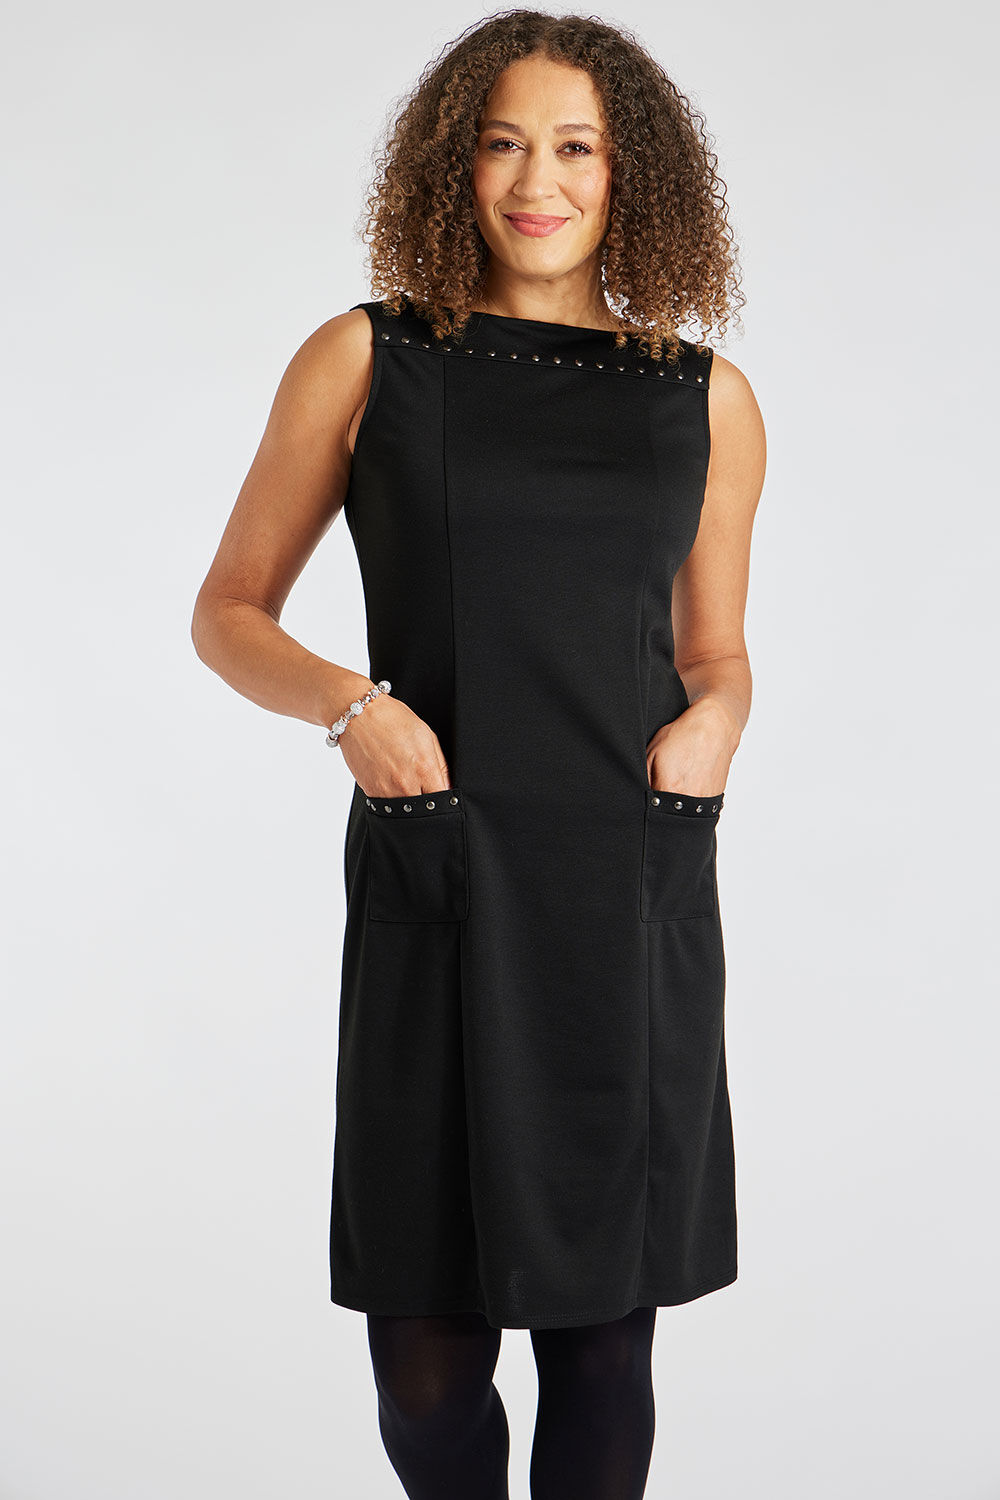 Bonmarche Black Sleeveless Plain Ponte Dress With Stud Detail, Size: 16